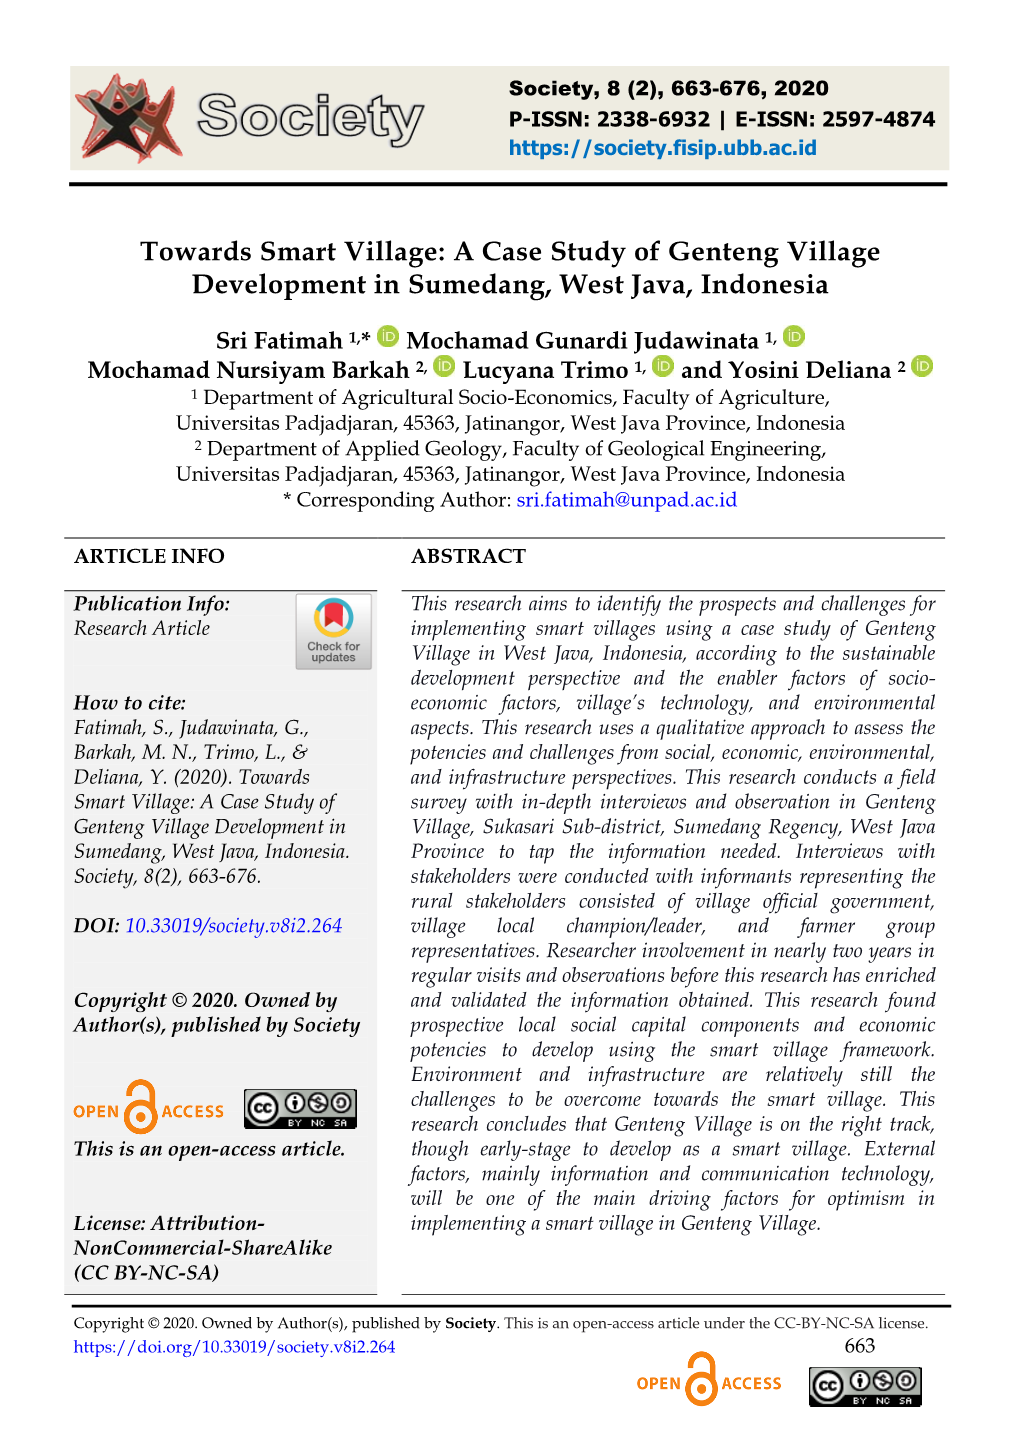 Towards Smart Village: a Case Study of Genteng Village Development in Sumedang, West Java, Indonesia